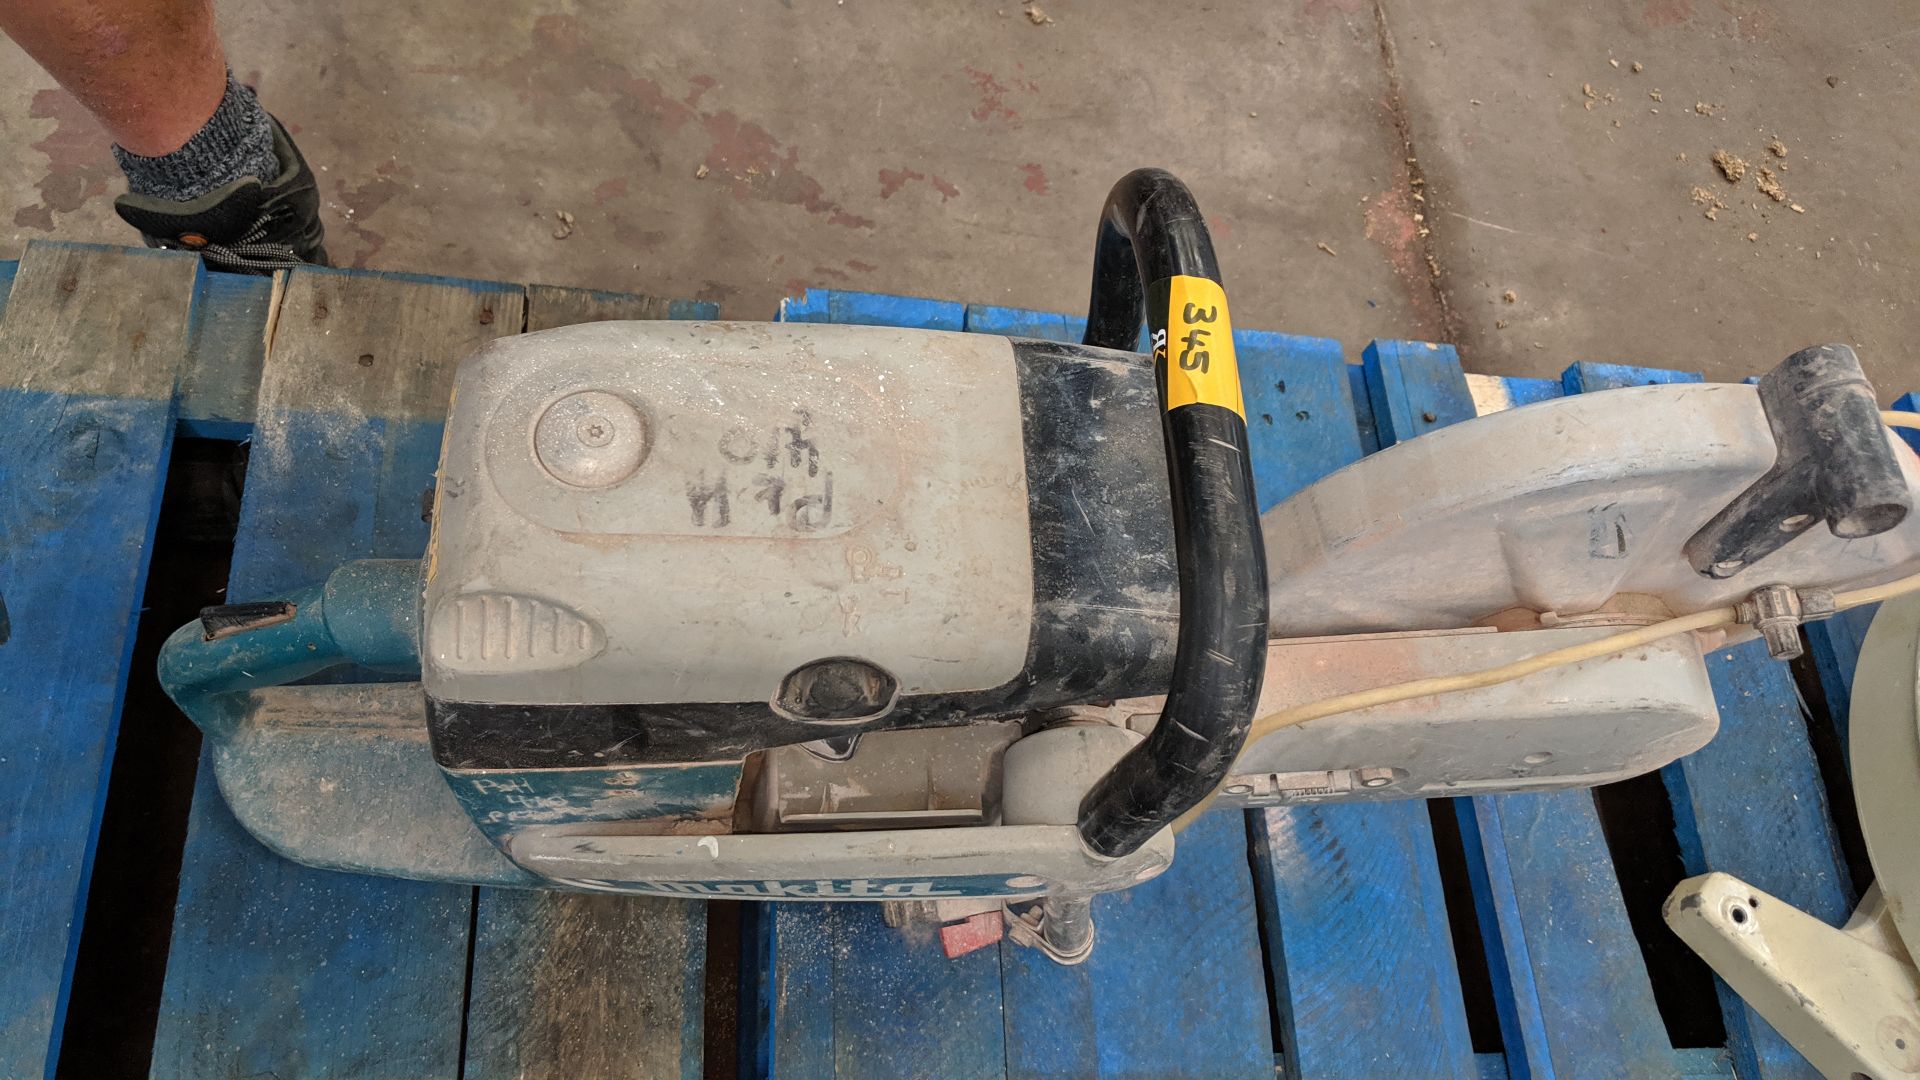 Makita petrol saw - missing starter handle IMPORTANT: Please remember goods successfully bid upon - Image 4 of 4